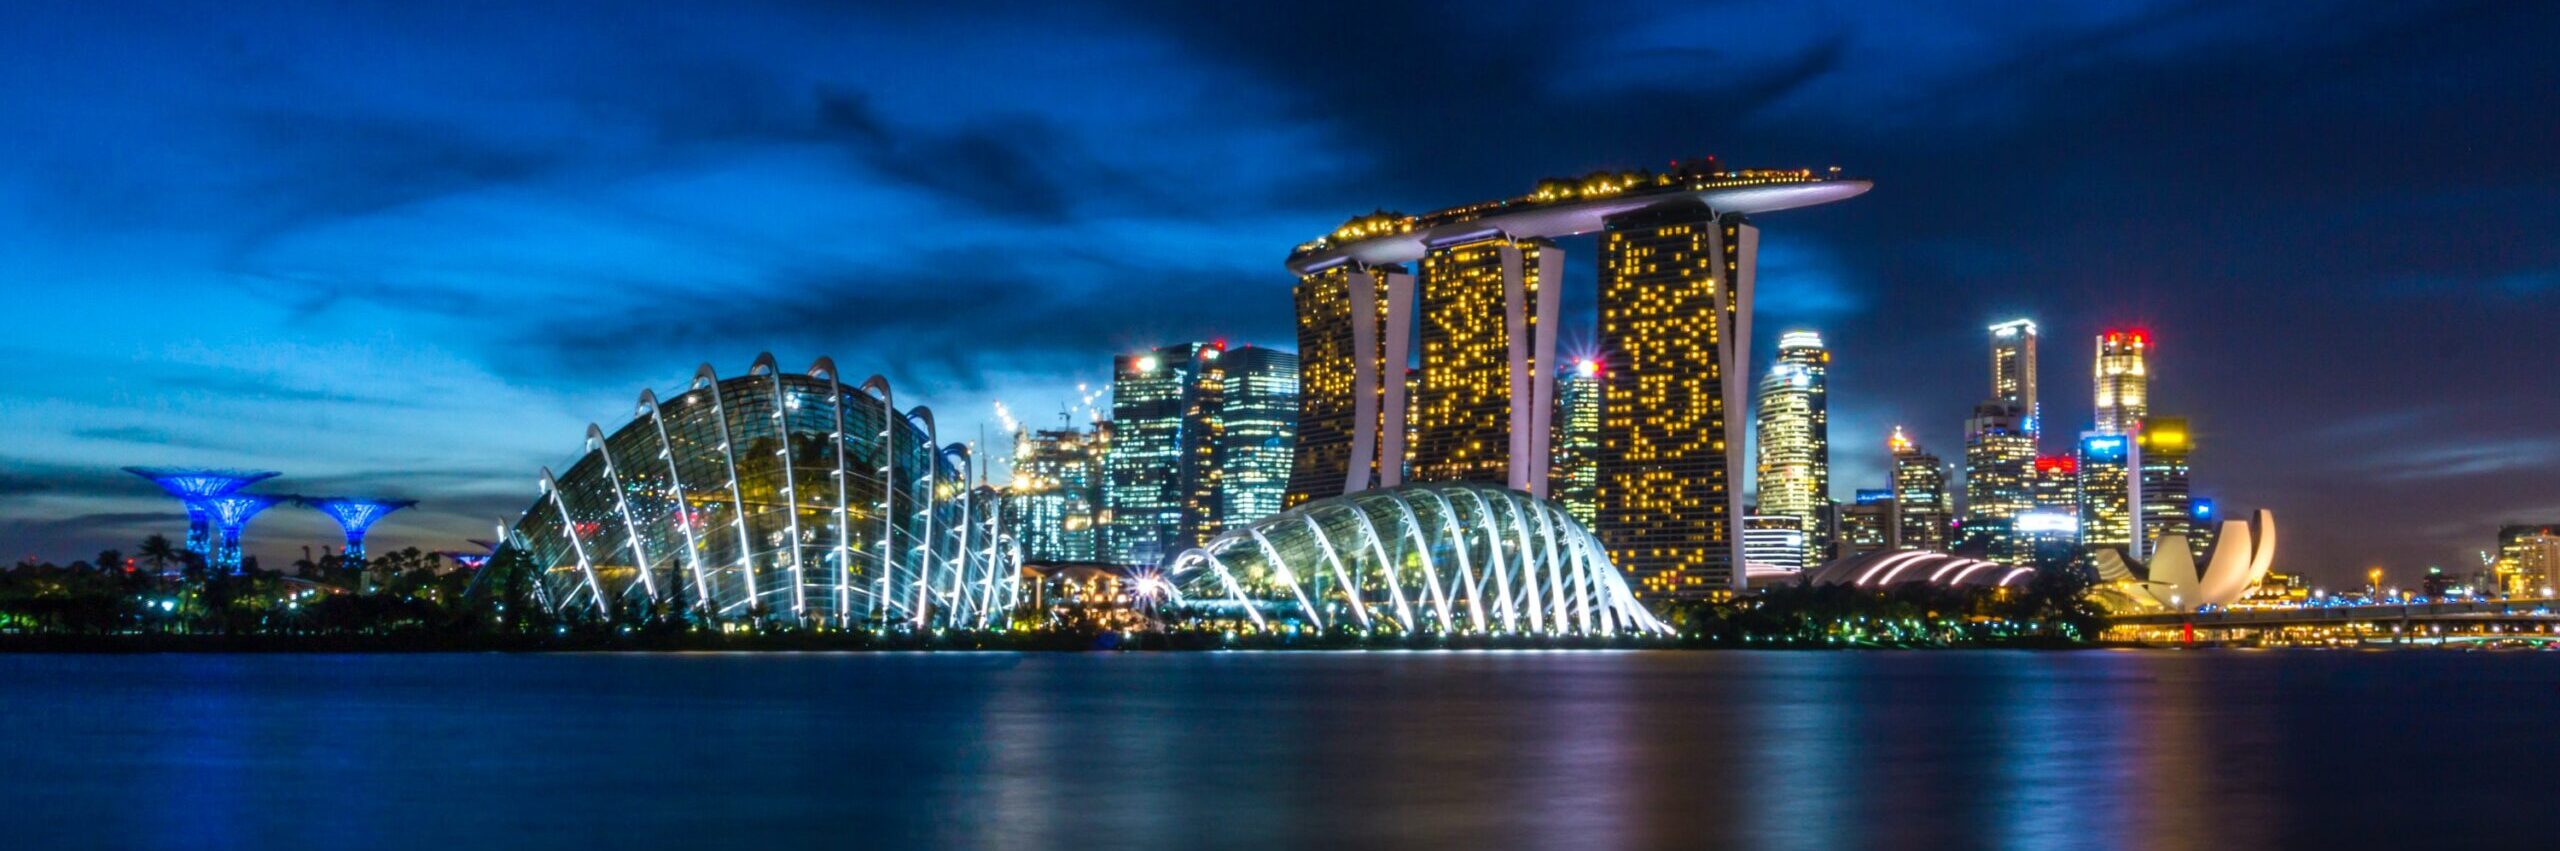 Singapore, marina bay